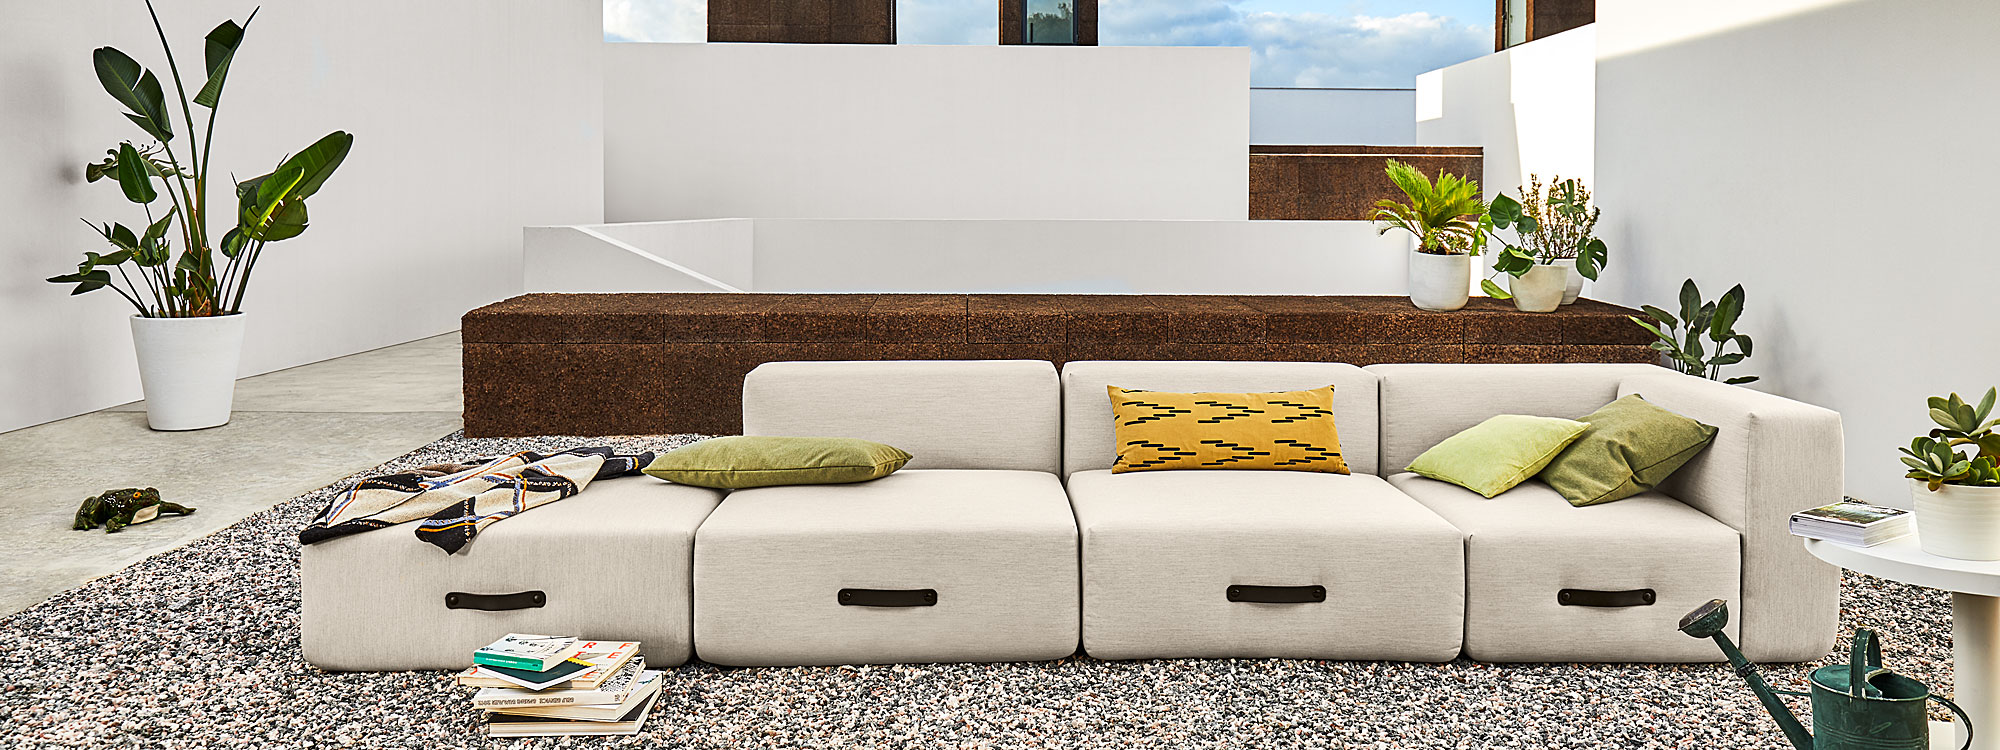 Image of Grey Miami garden sofa designed by Mark Braun for Conmoto modern garden furniture company, Germany.